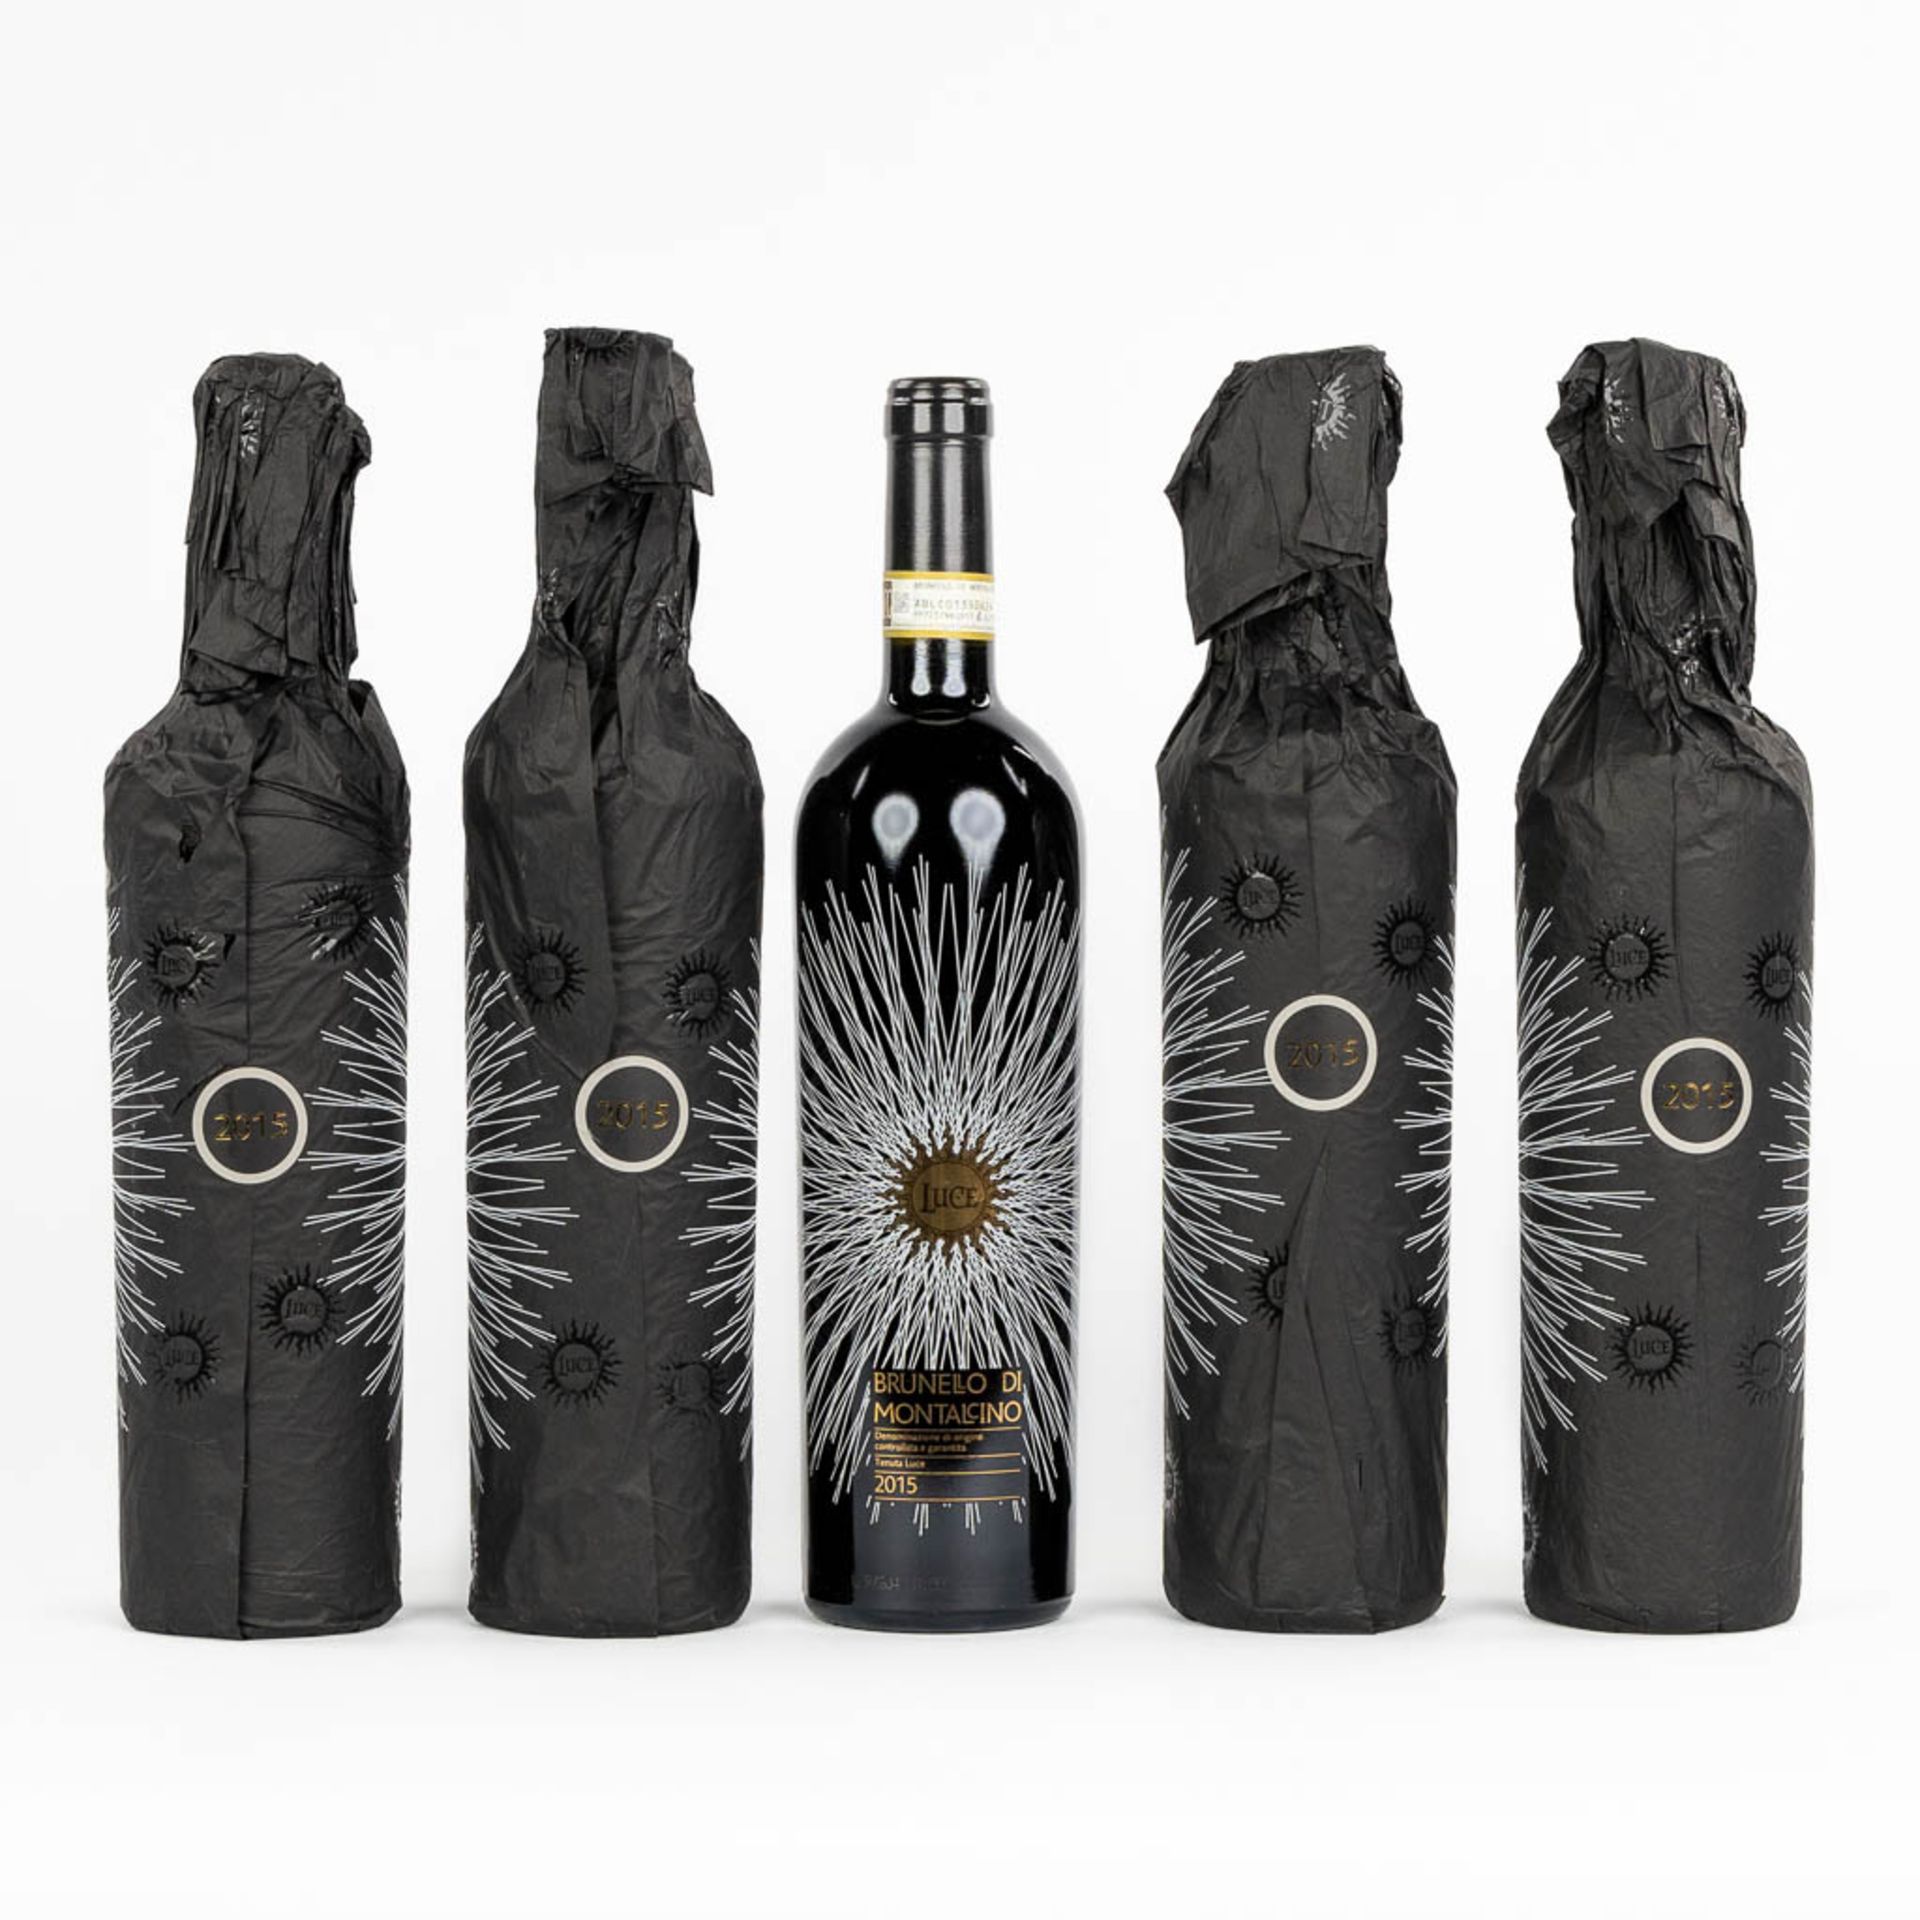 2015 Luce Brunello Di Montalcino, 5 bottles. - Image 5 of 7